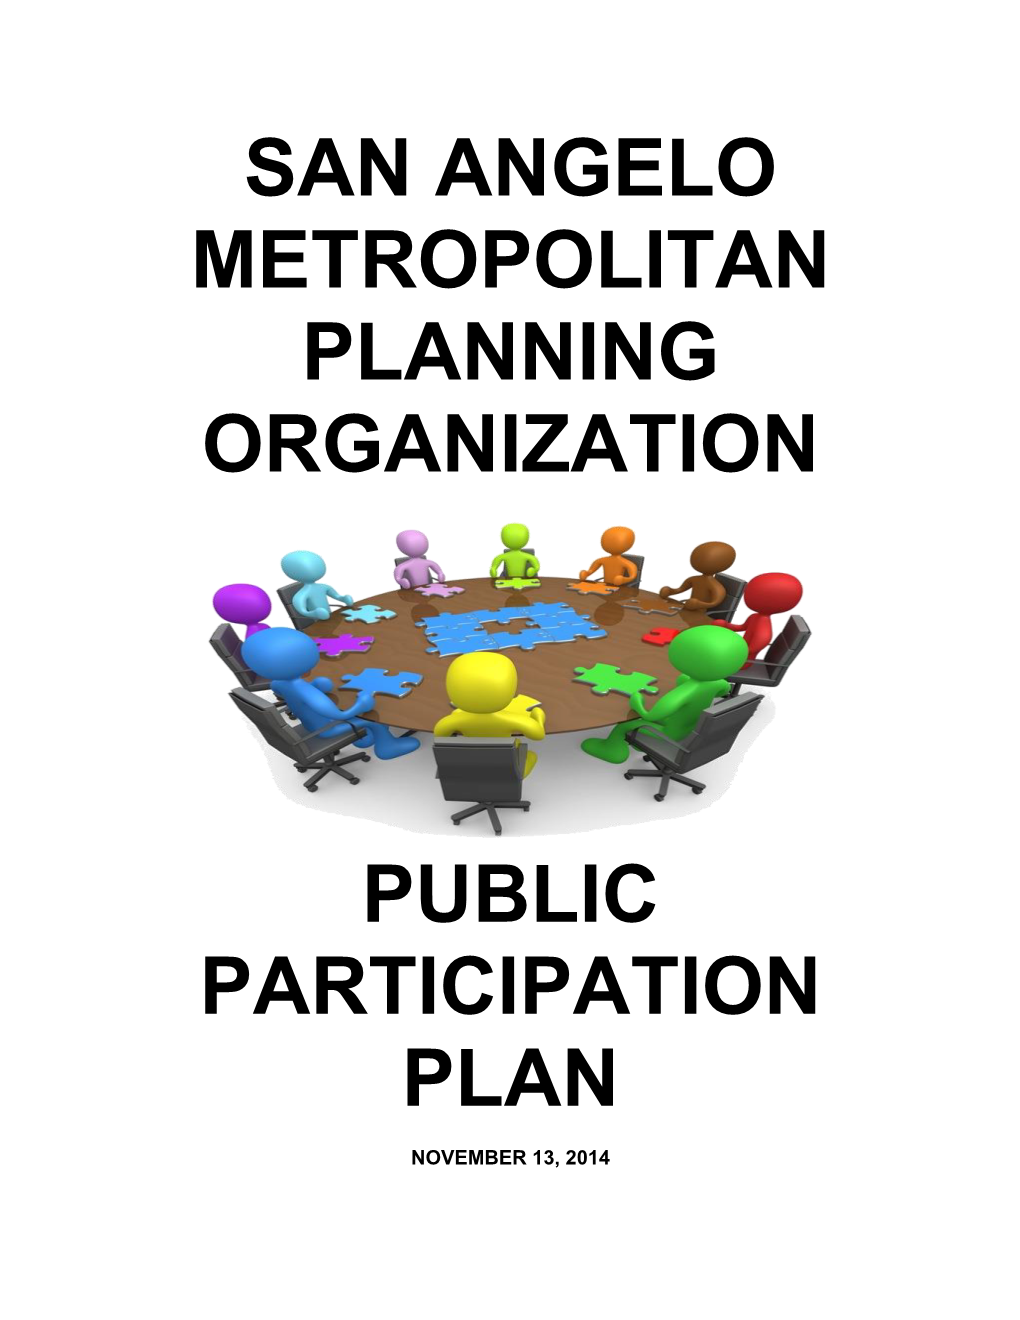 San Angelo Metropolitan Planning Organization